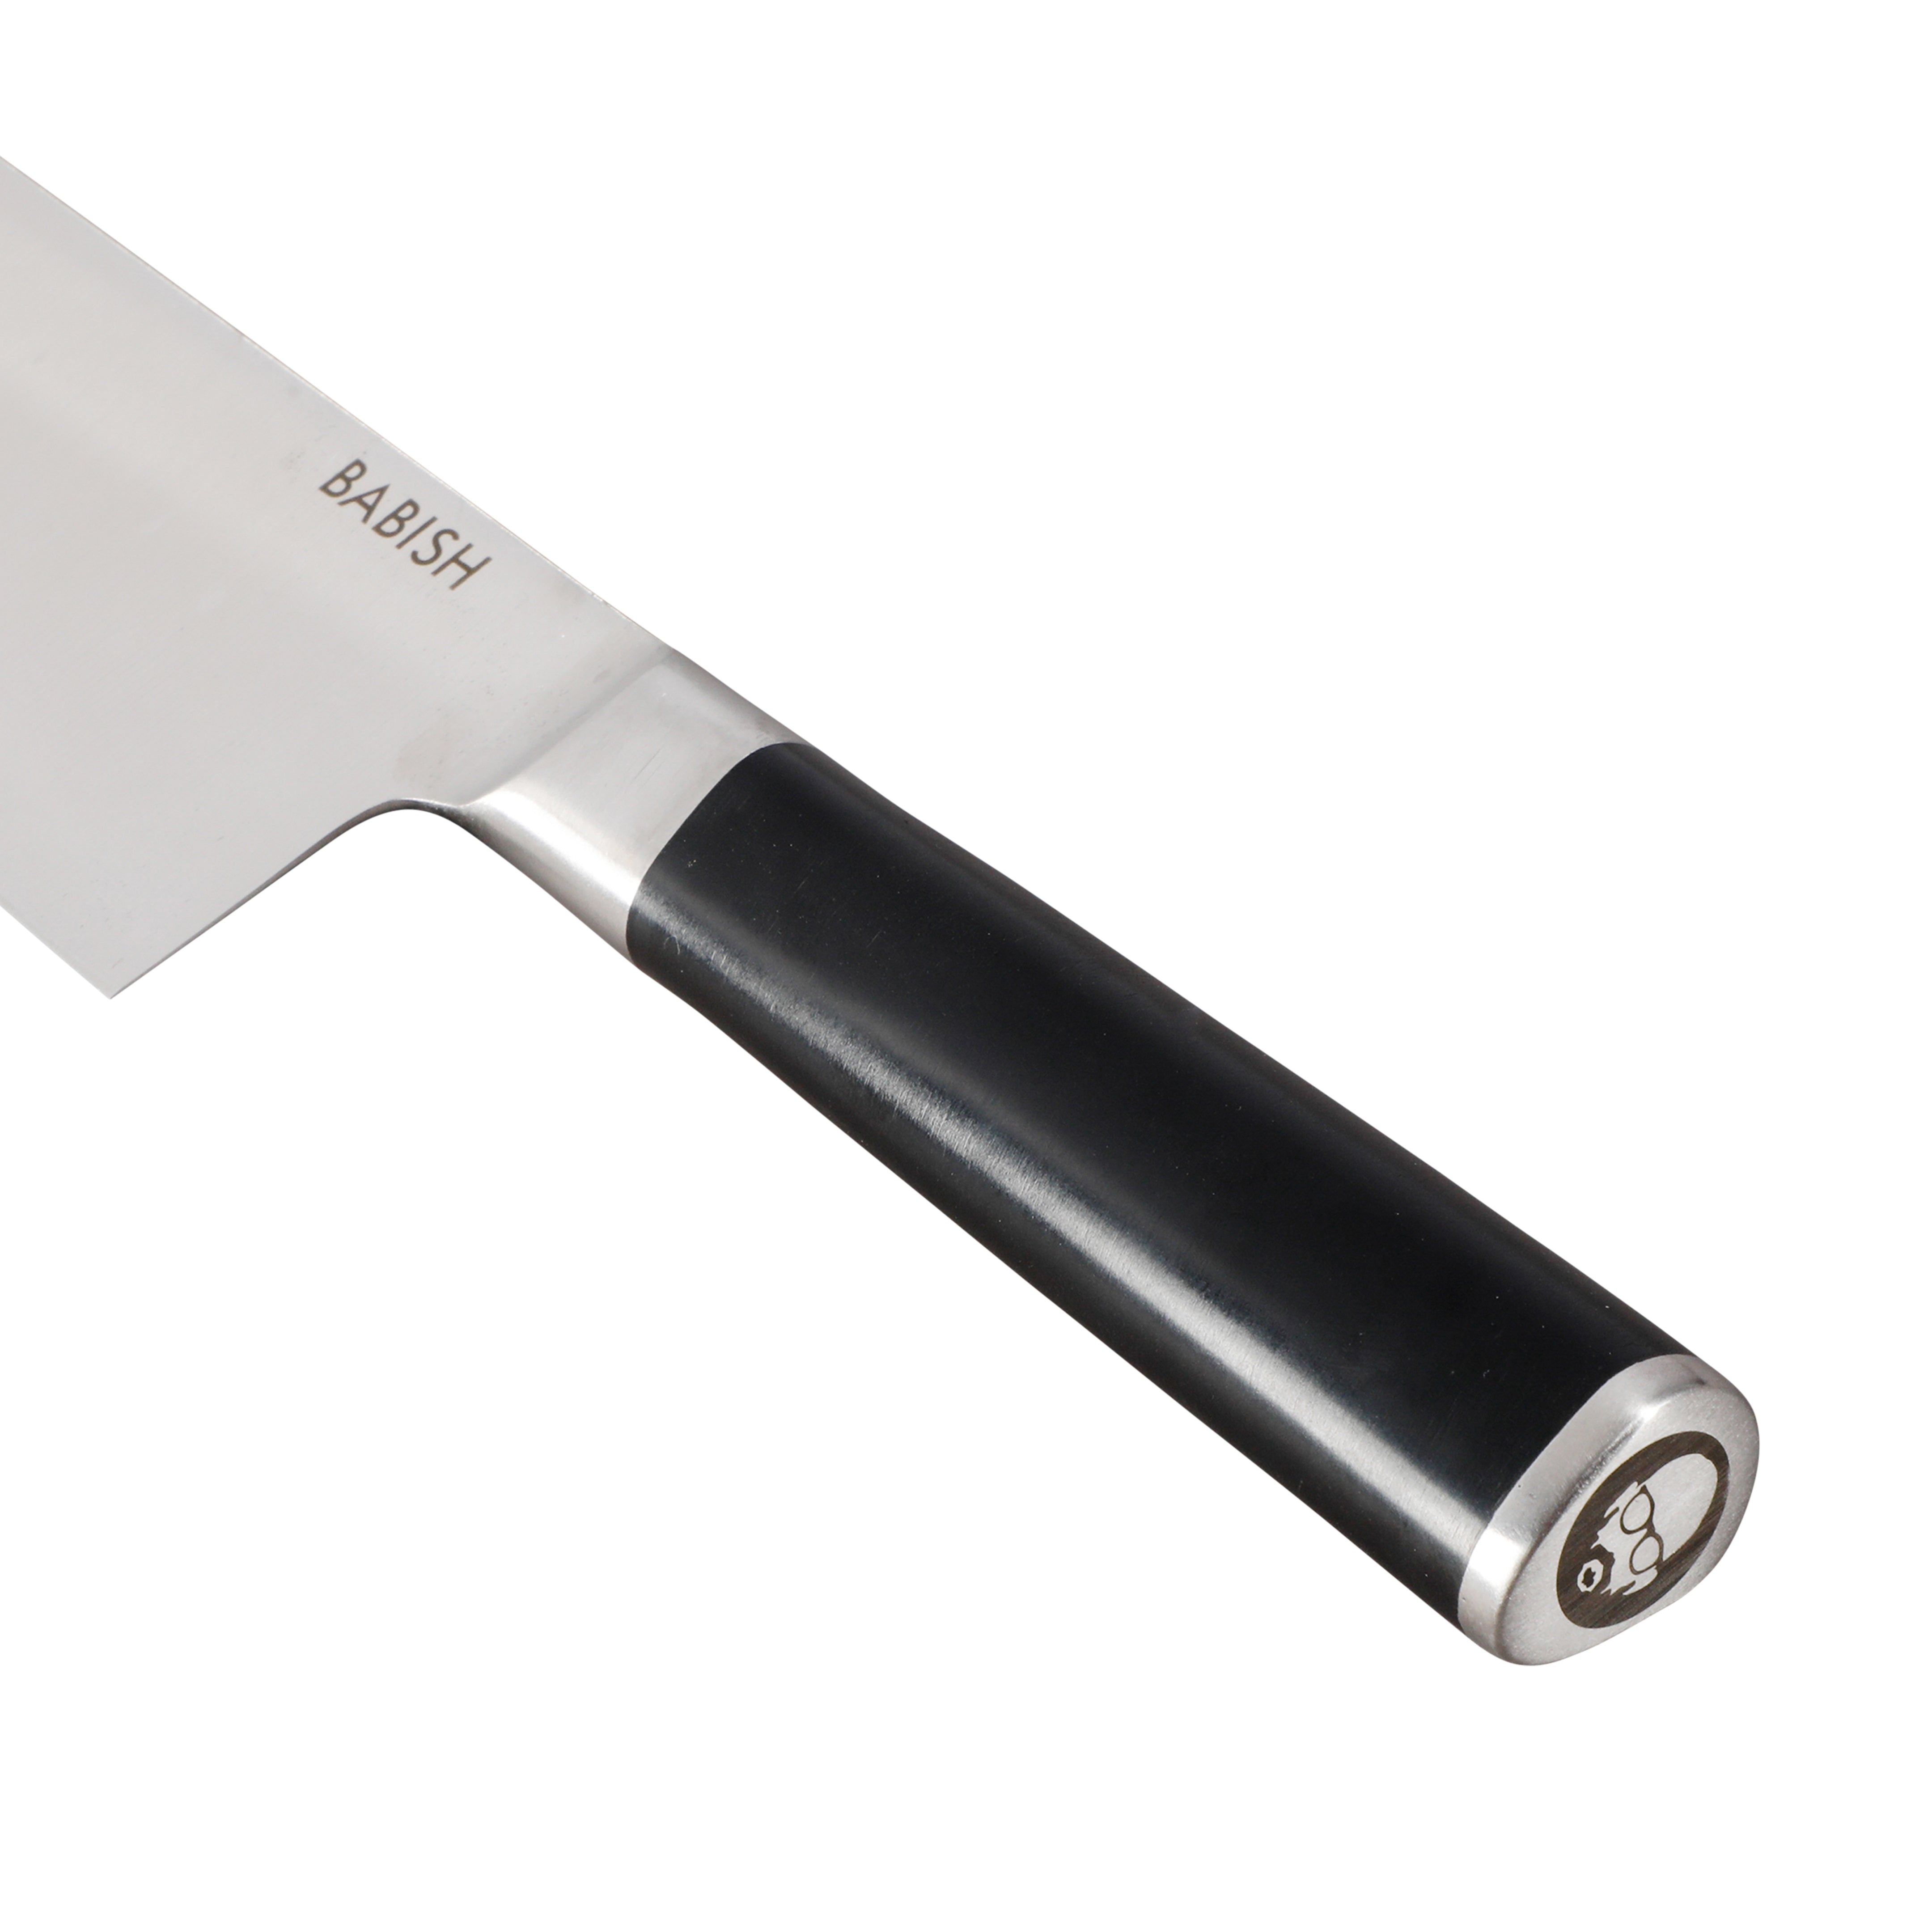 UberSchnitt Carbon Steel 10 Inch Knife Honing Rod + Knife Guard Complete  Kit 